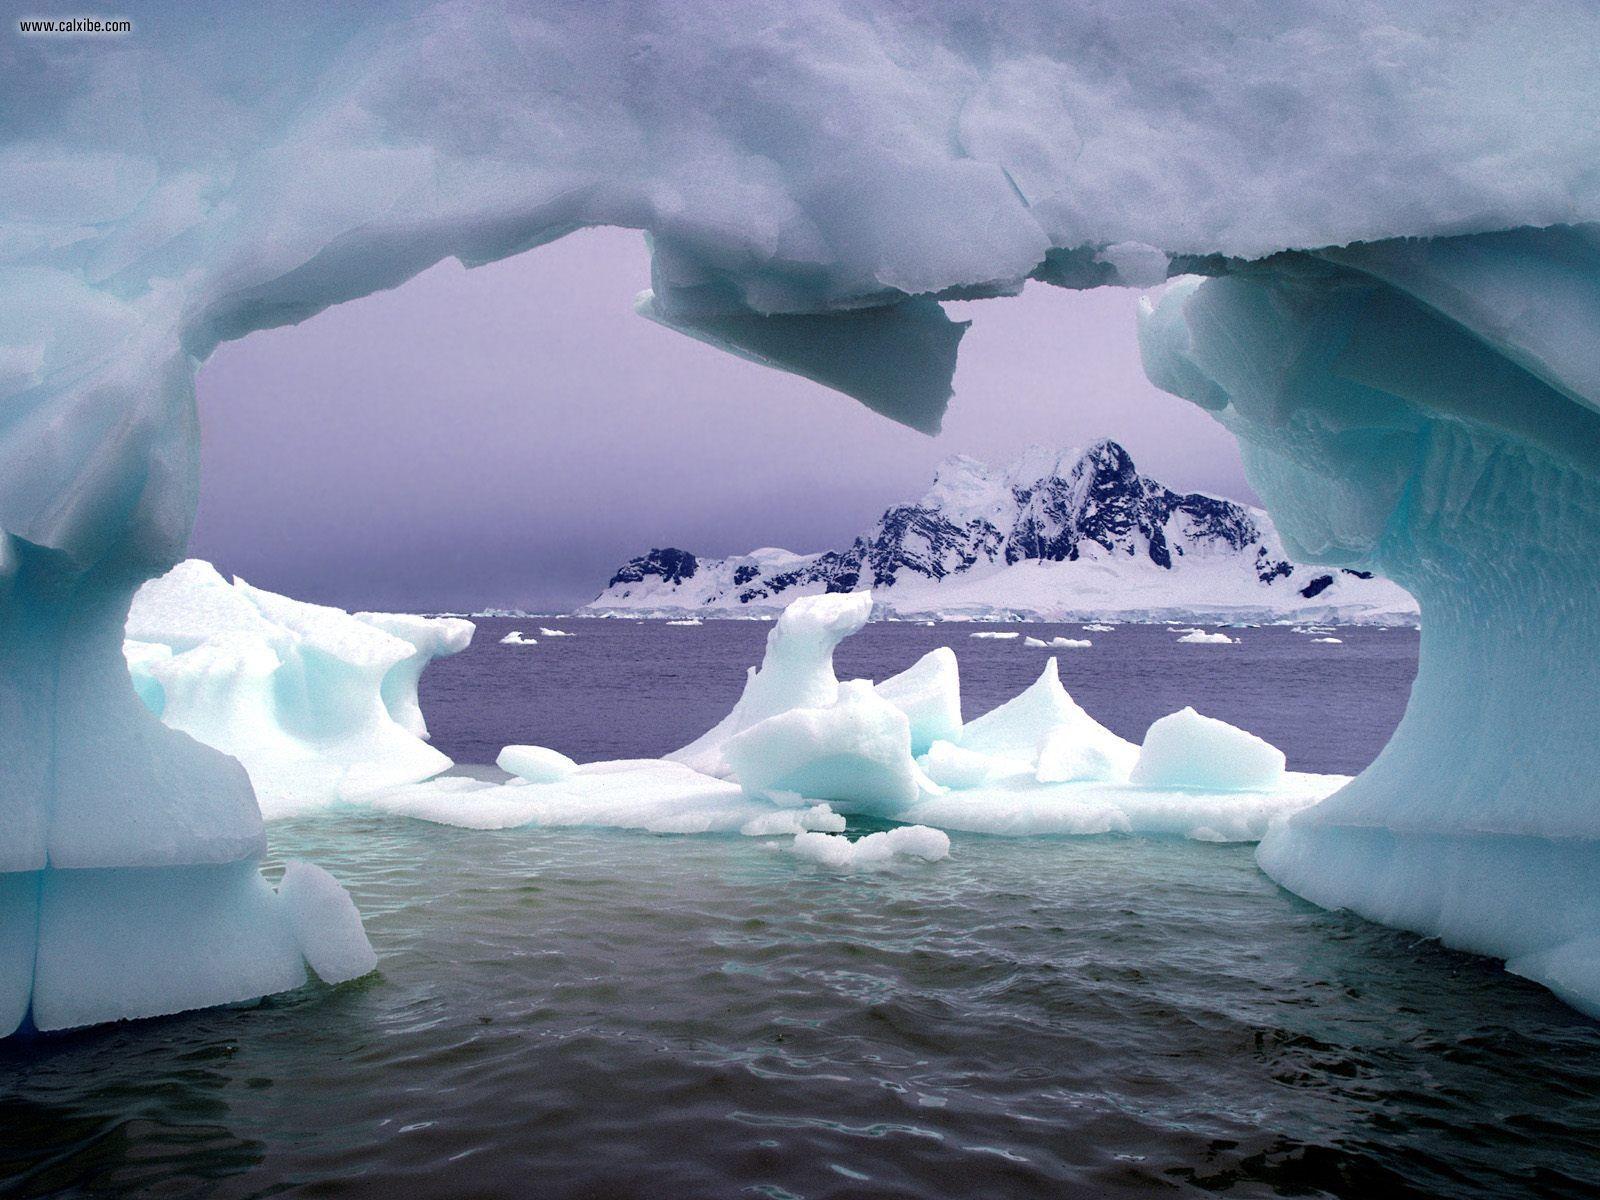 Nature: Paradise Bay Antarctica, picture nr. 21698